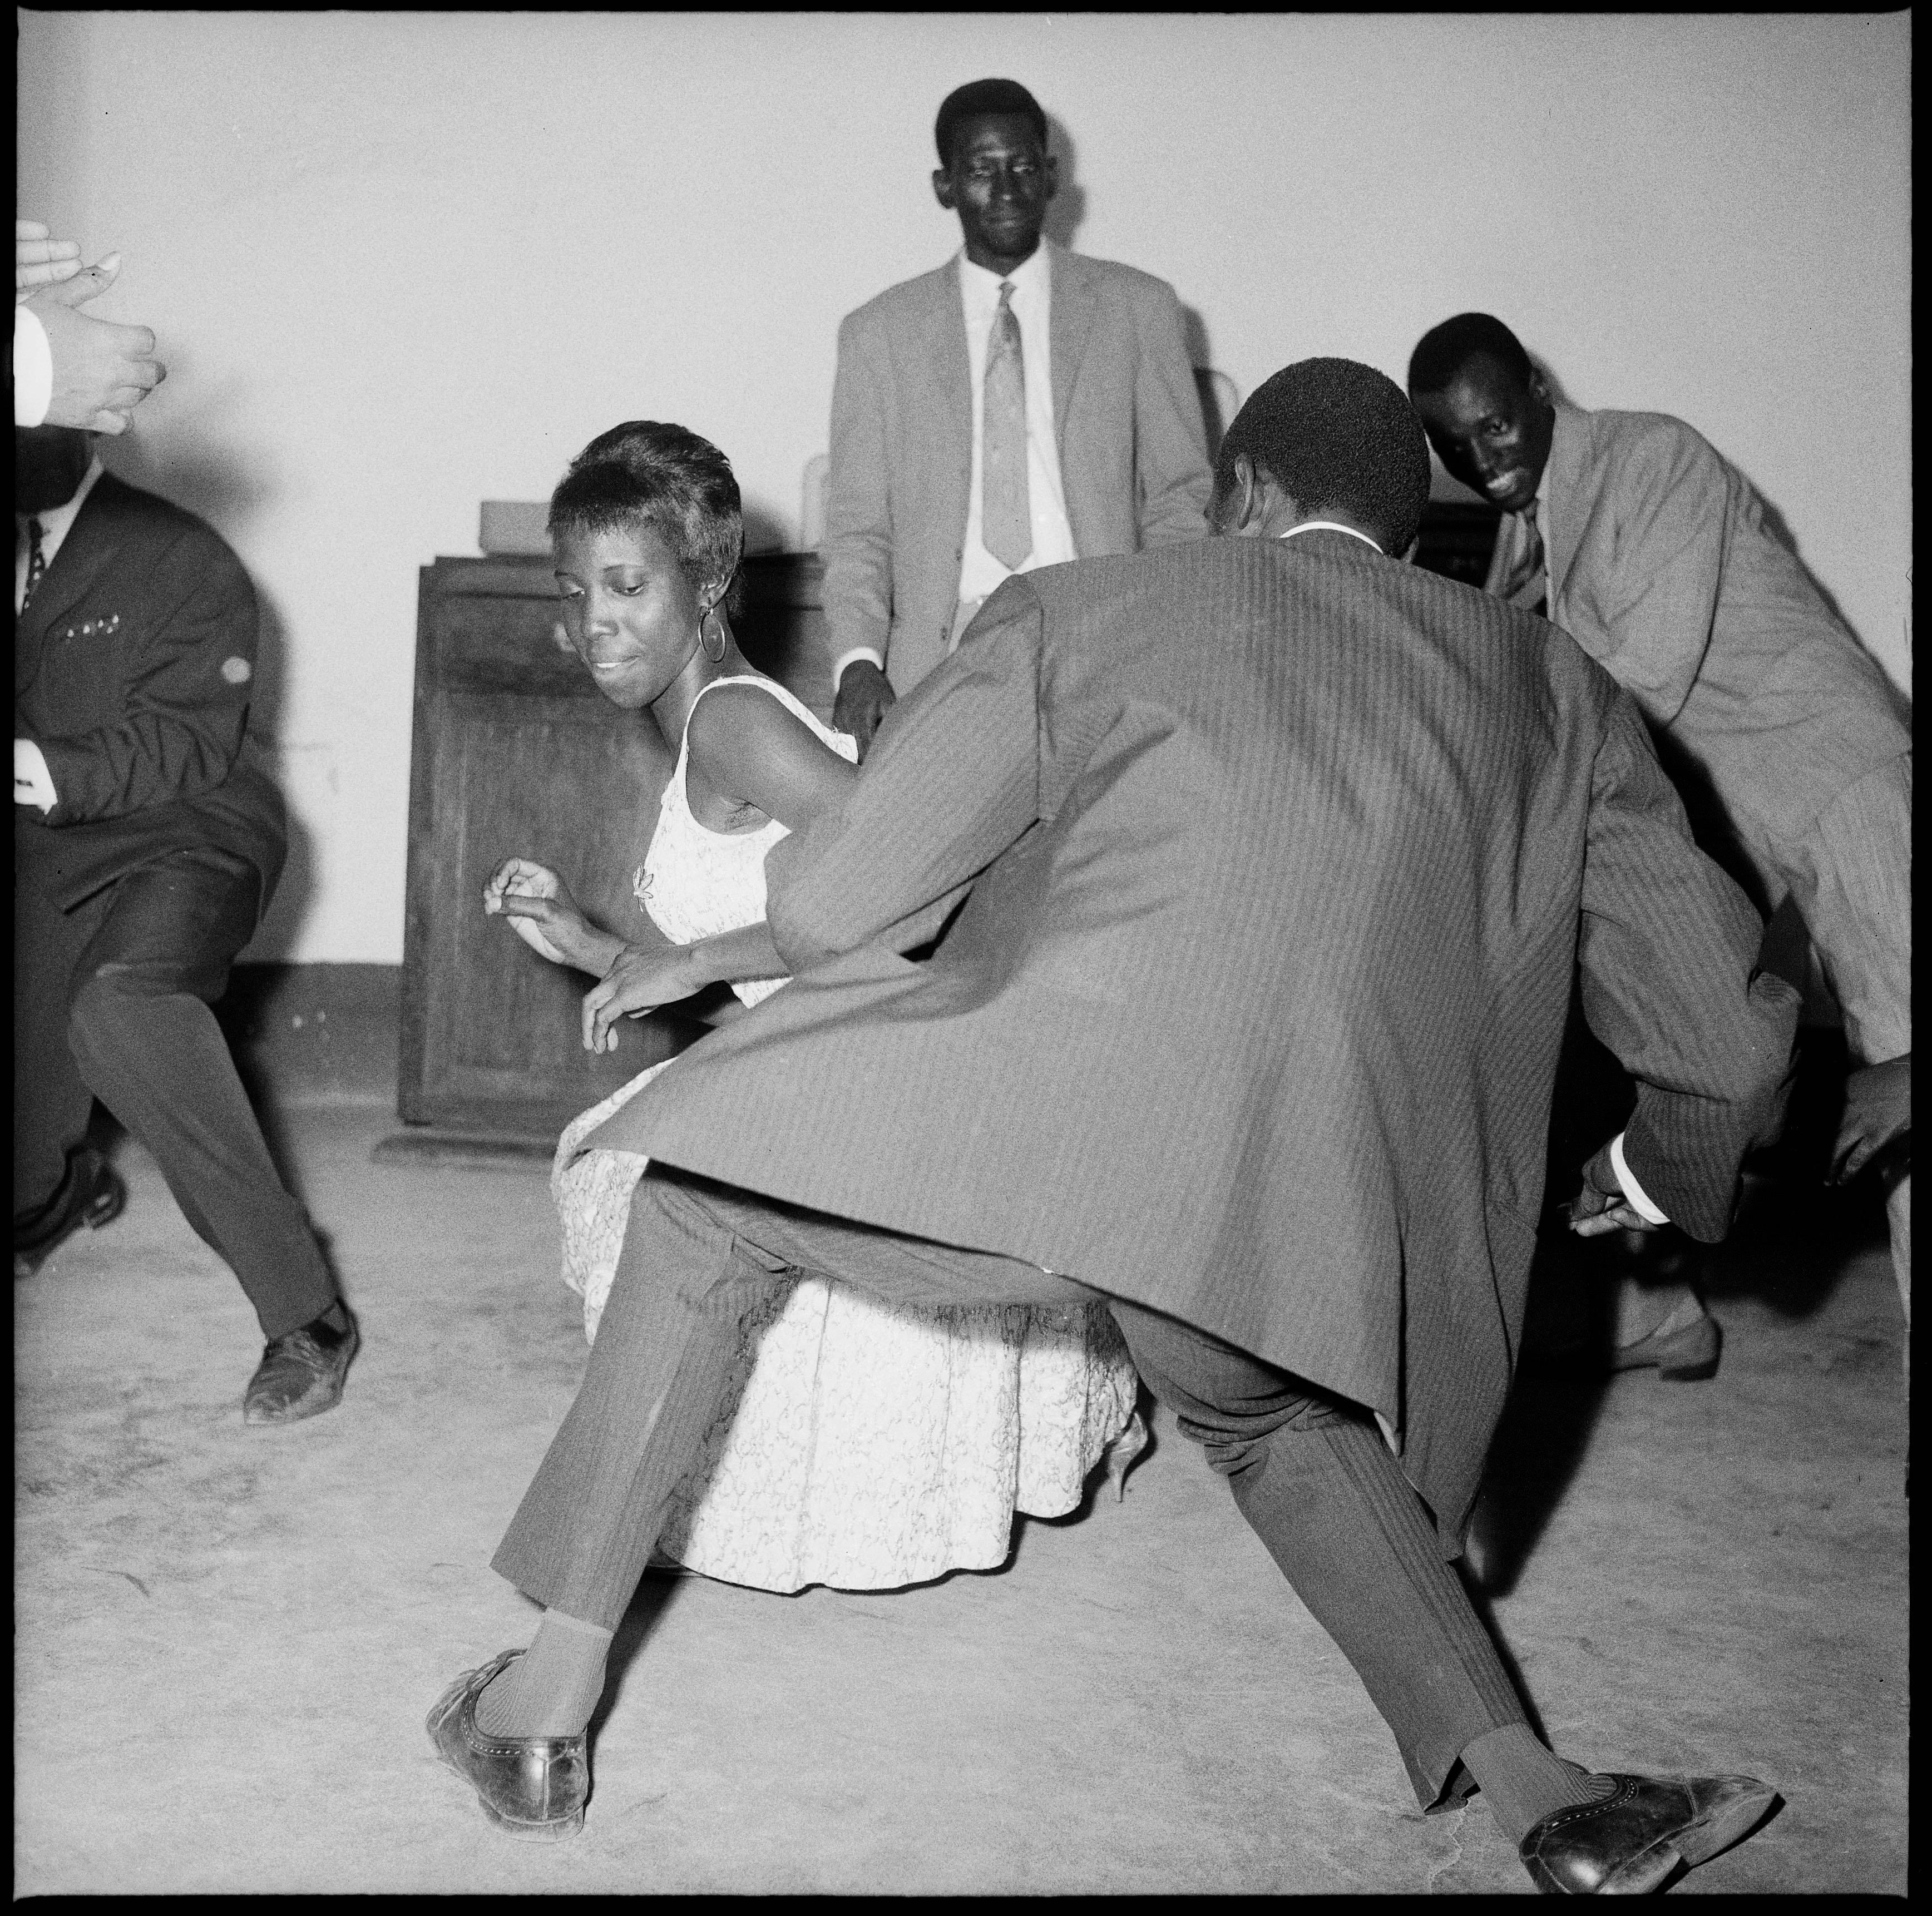 Malick Sidibé Black and White Photograph - Dansez le twist